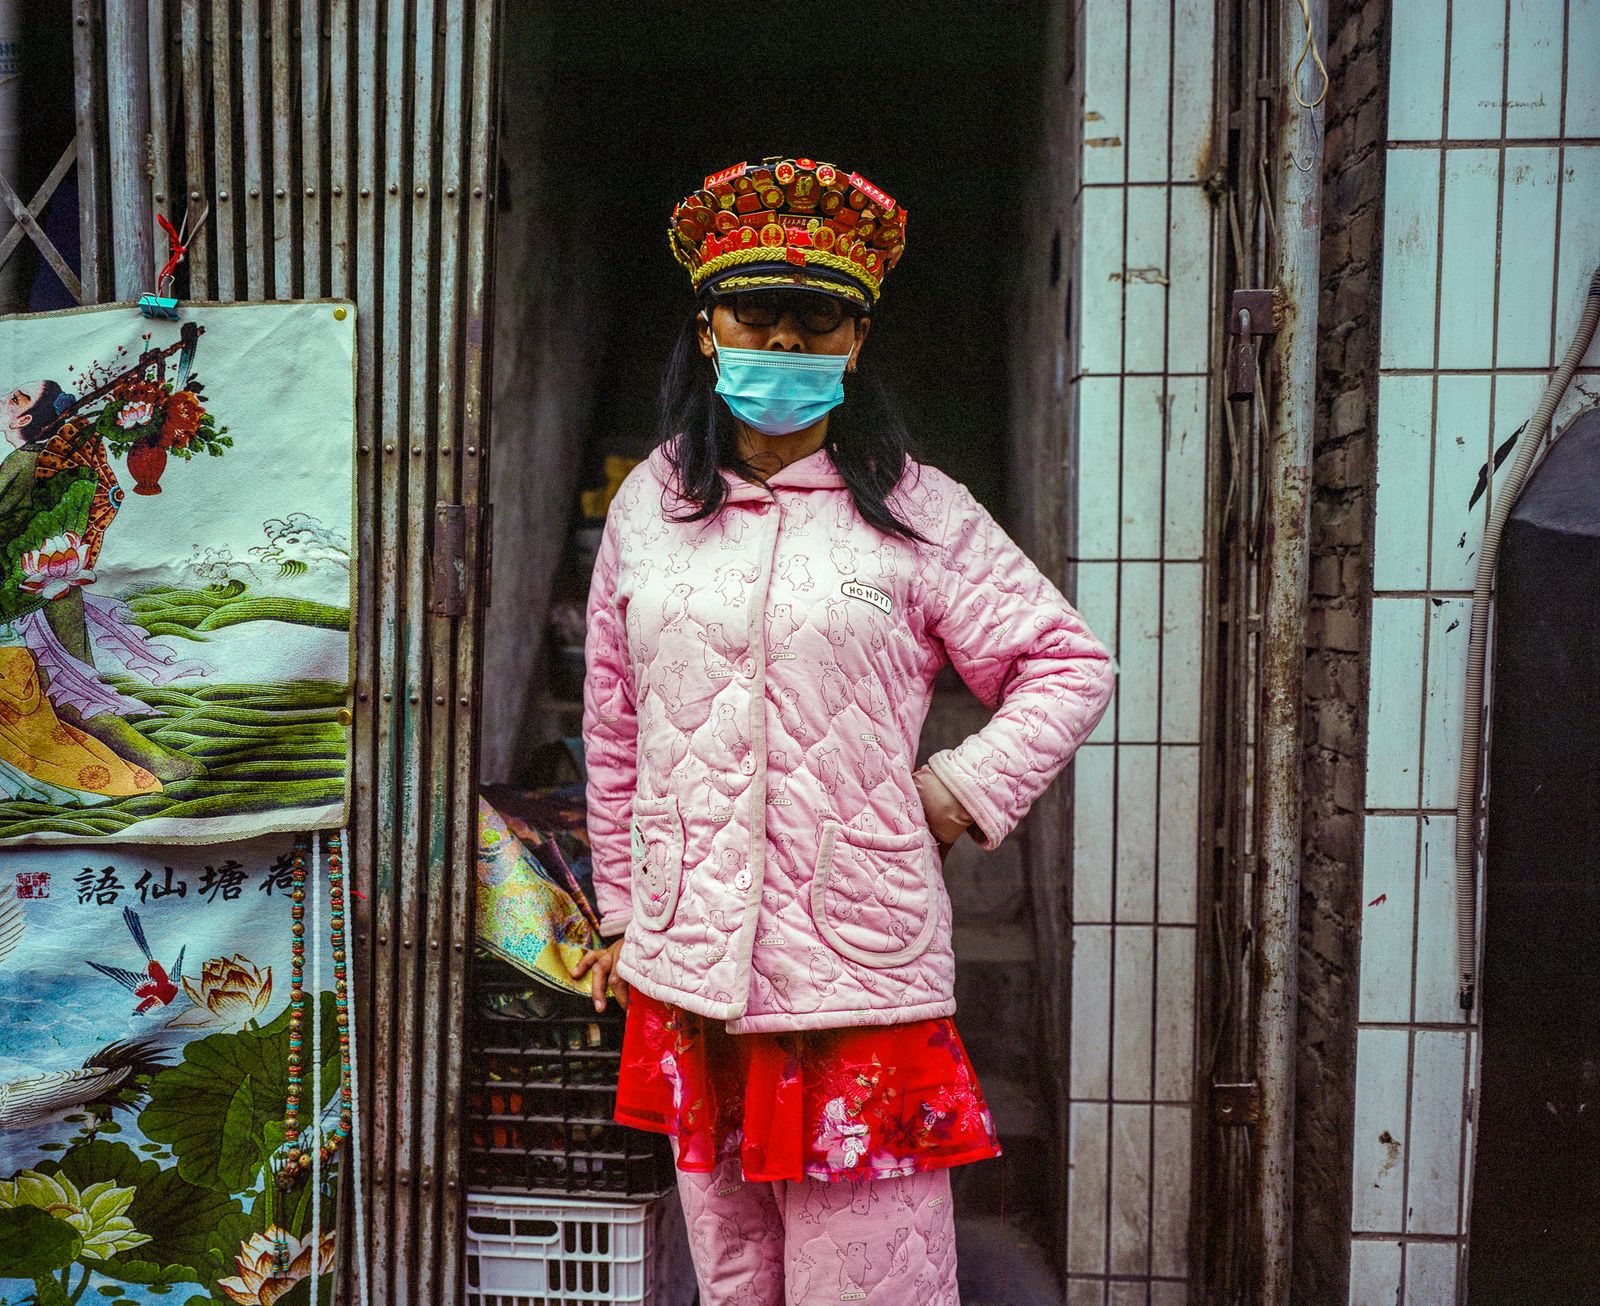 © Pan Wang - A man in a woman's dress stood in the Xicang market